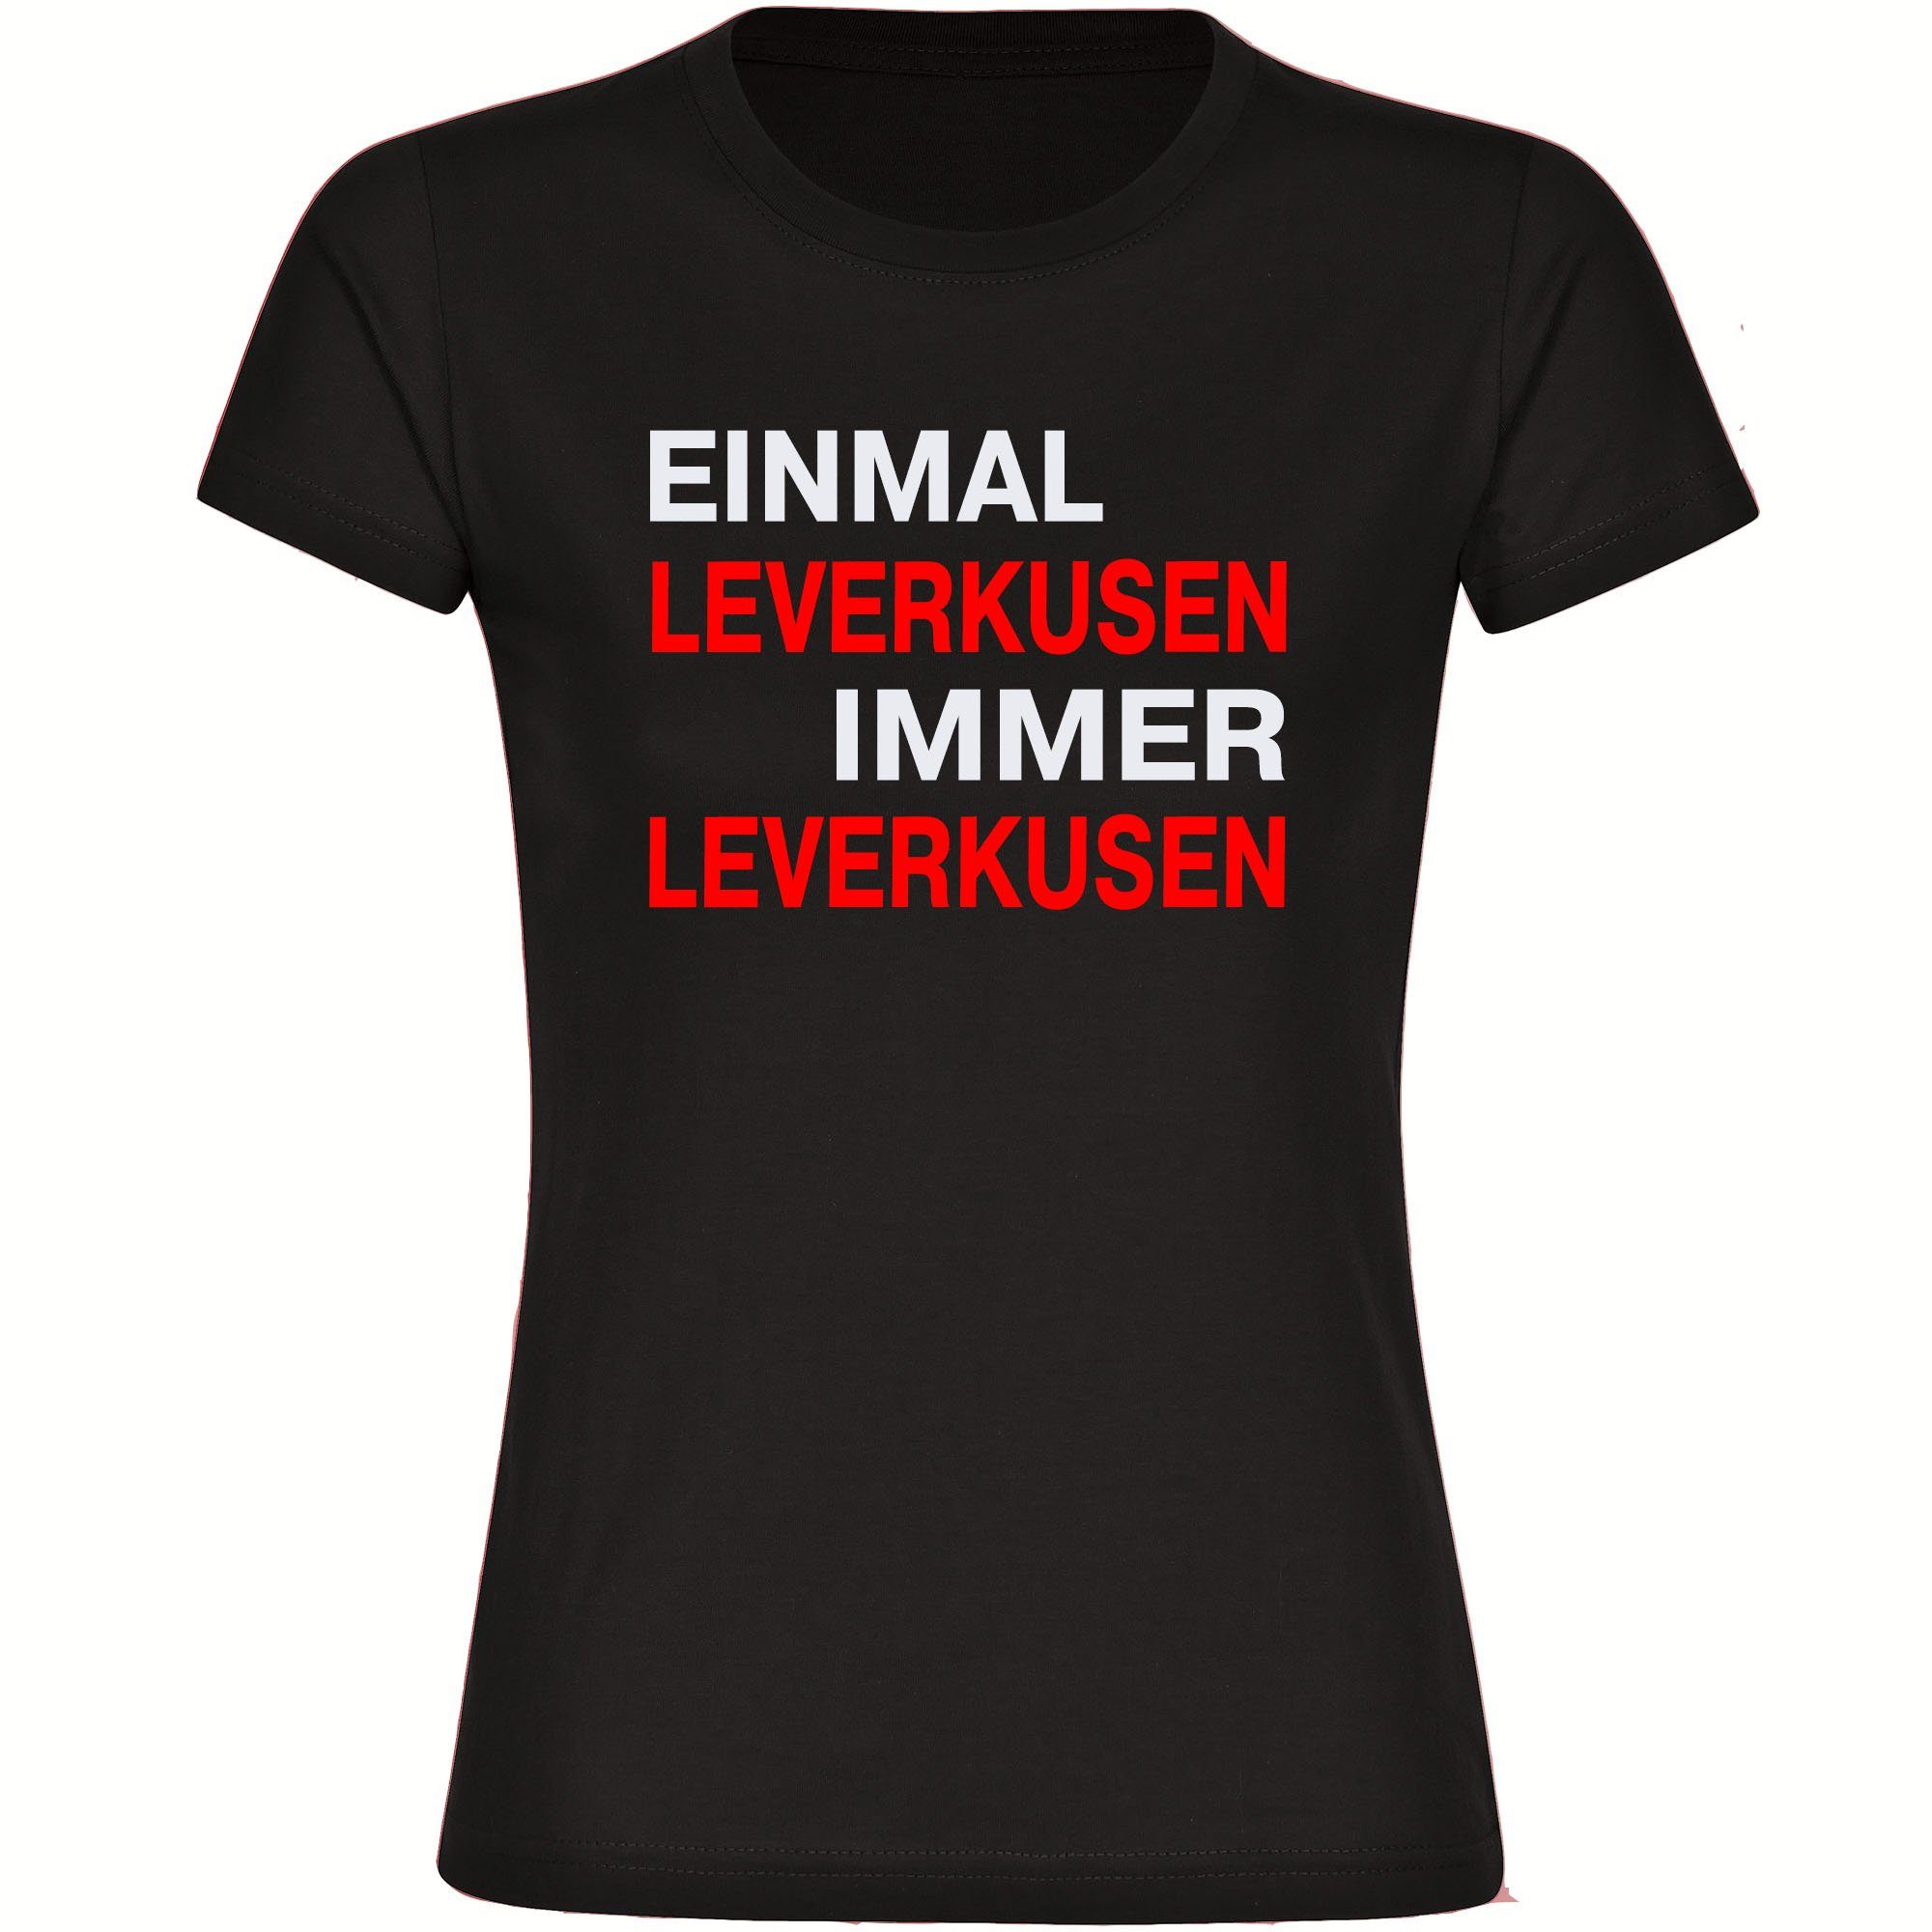 multifanshop T-Shirt Damen Leverkusen - Einmal Immer - Frauen